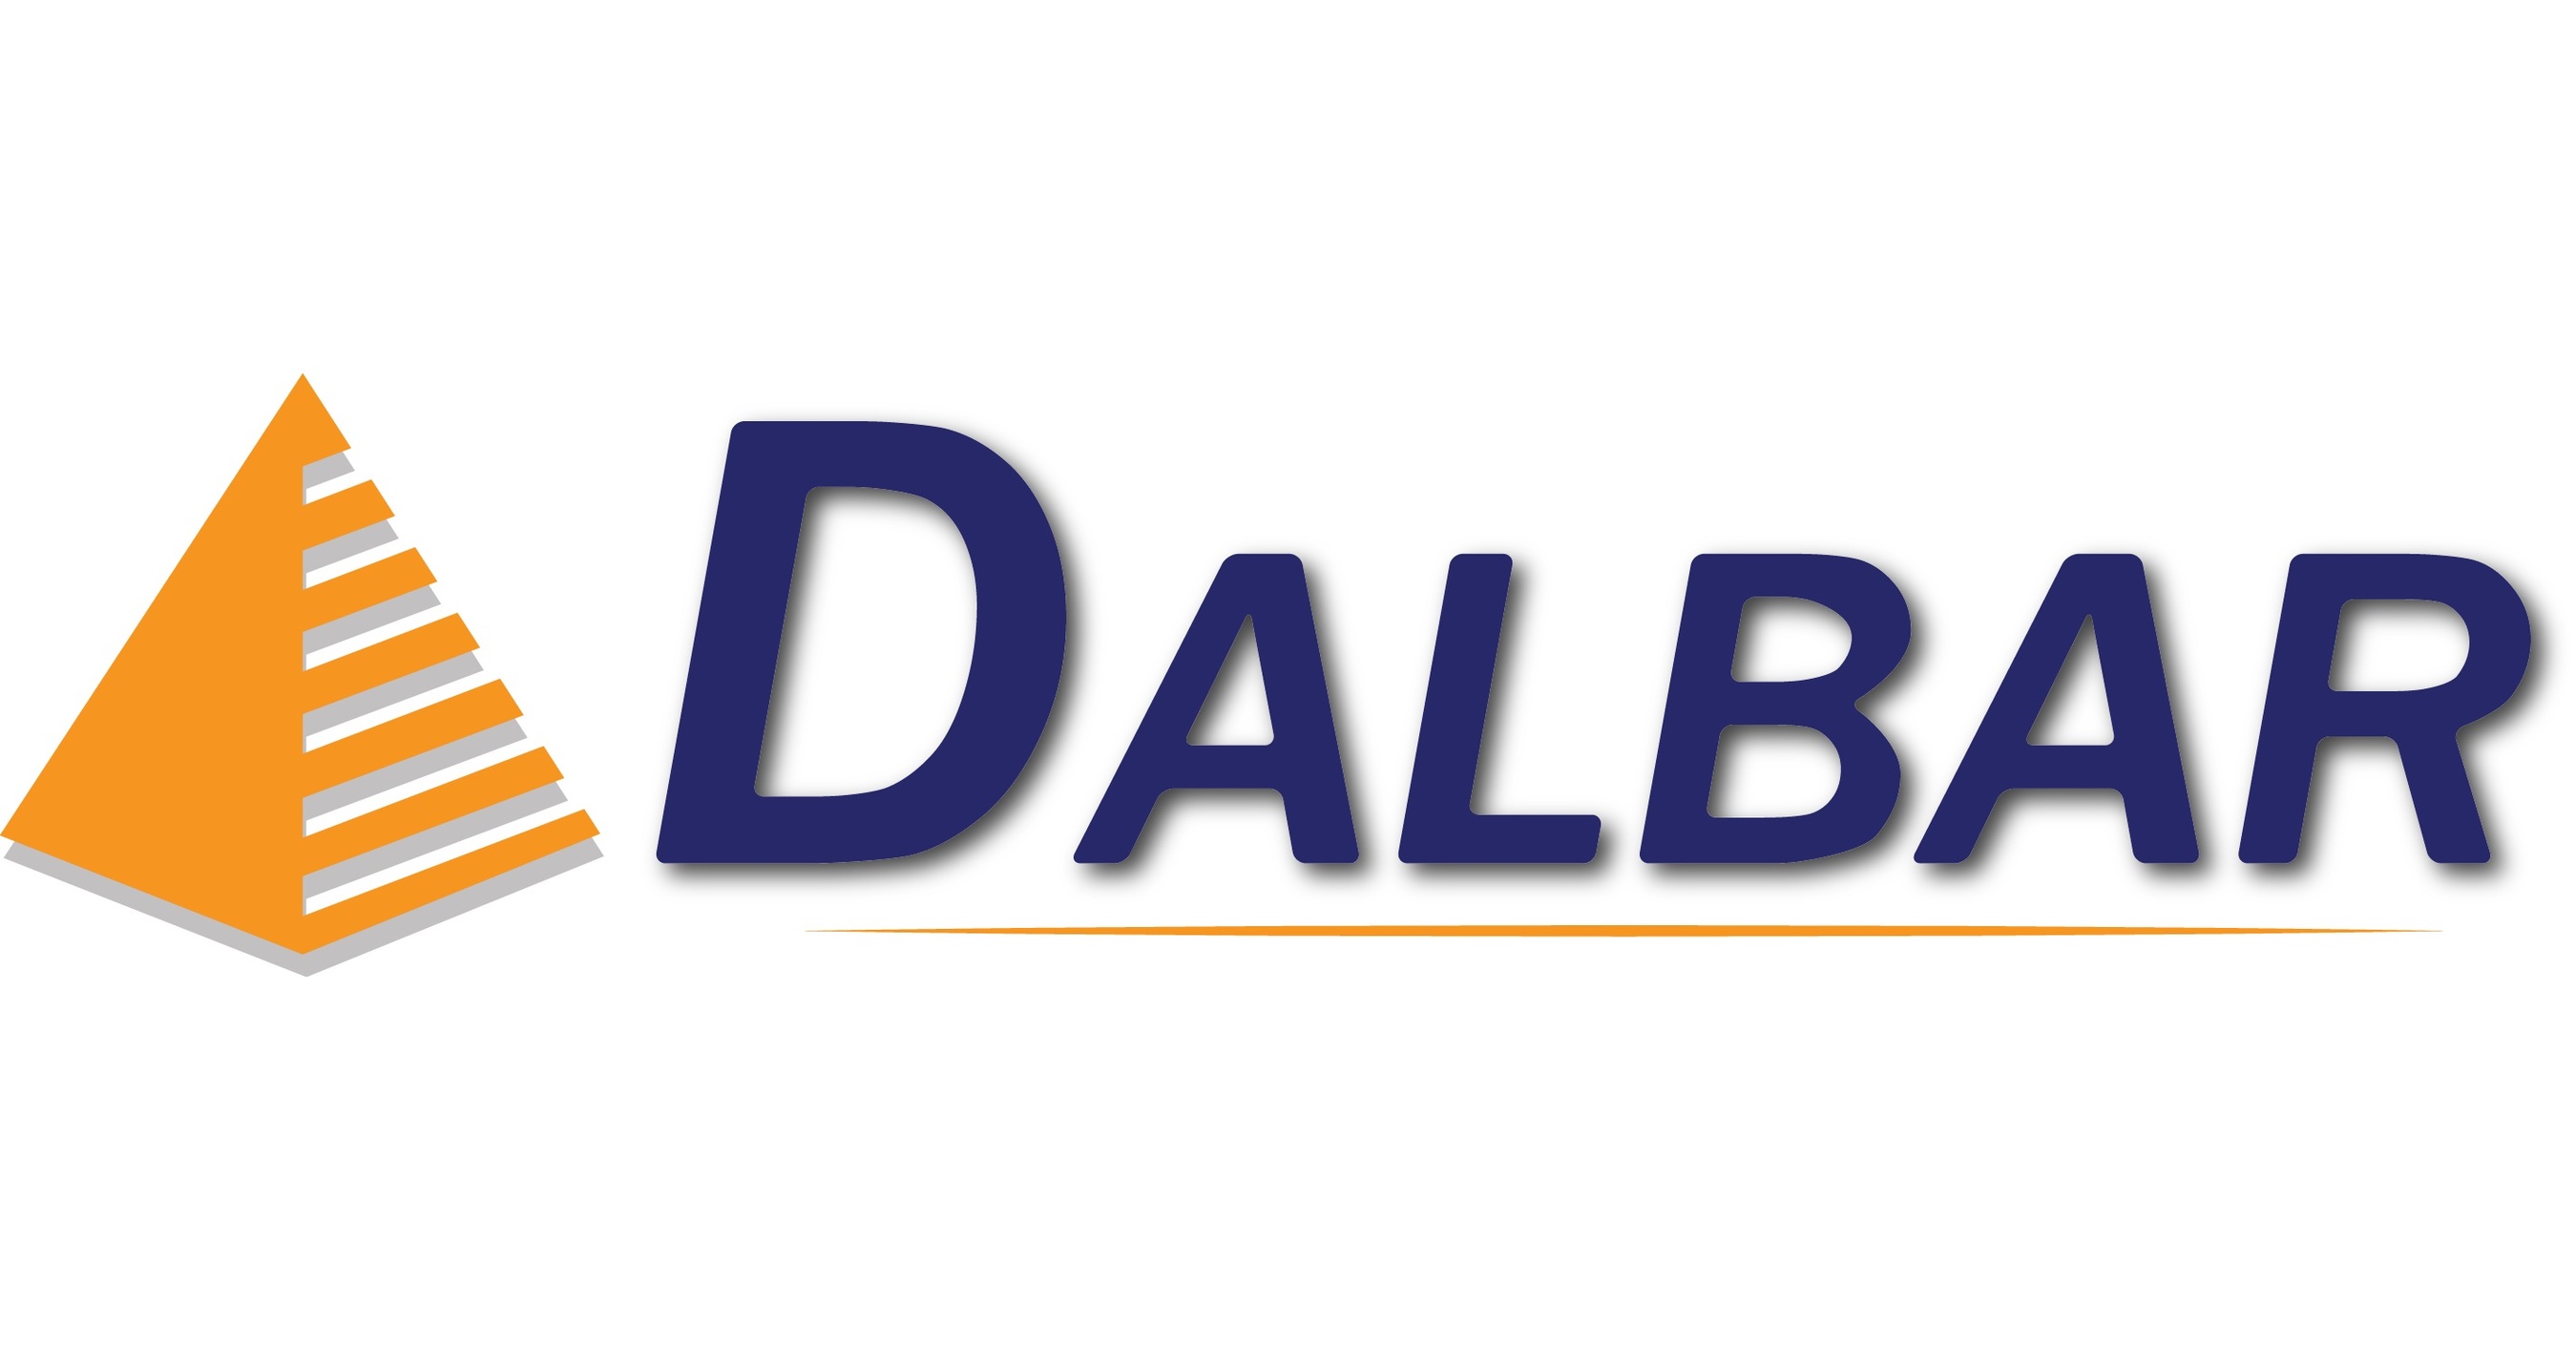 10:04 ET DALBAR Identifies the Top Account Statements